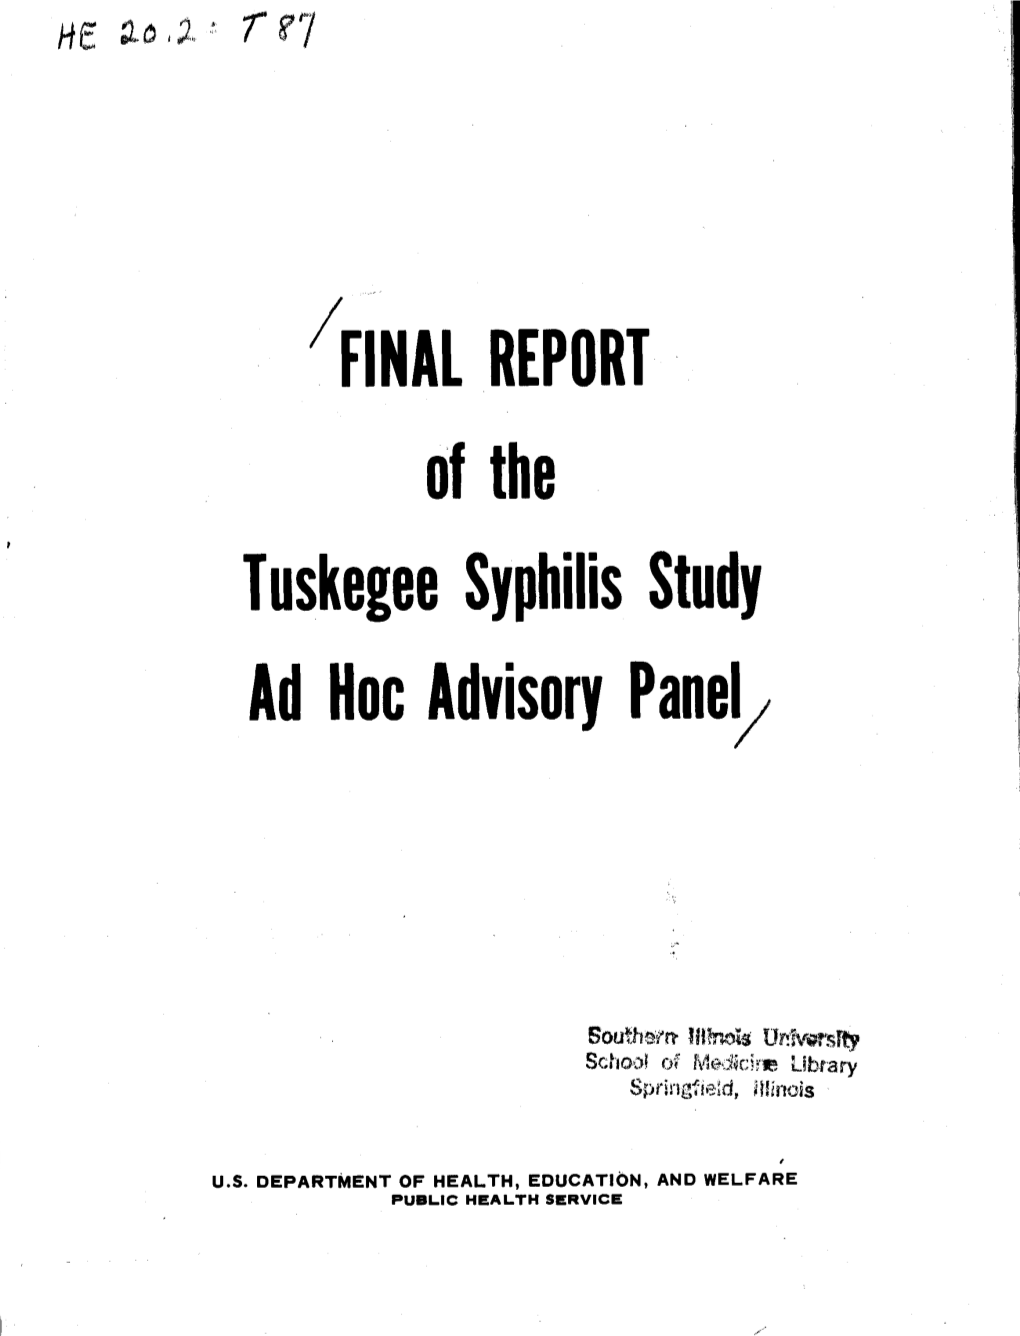 FINAL REPORT of the Tuskegee Syphilis Study Ad Hoc Advisory Panel